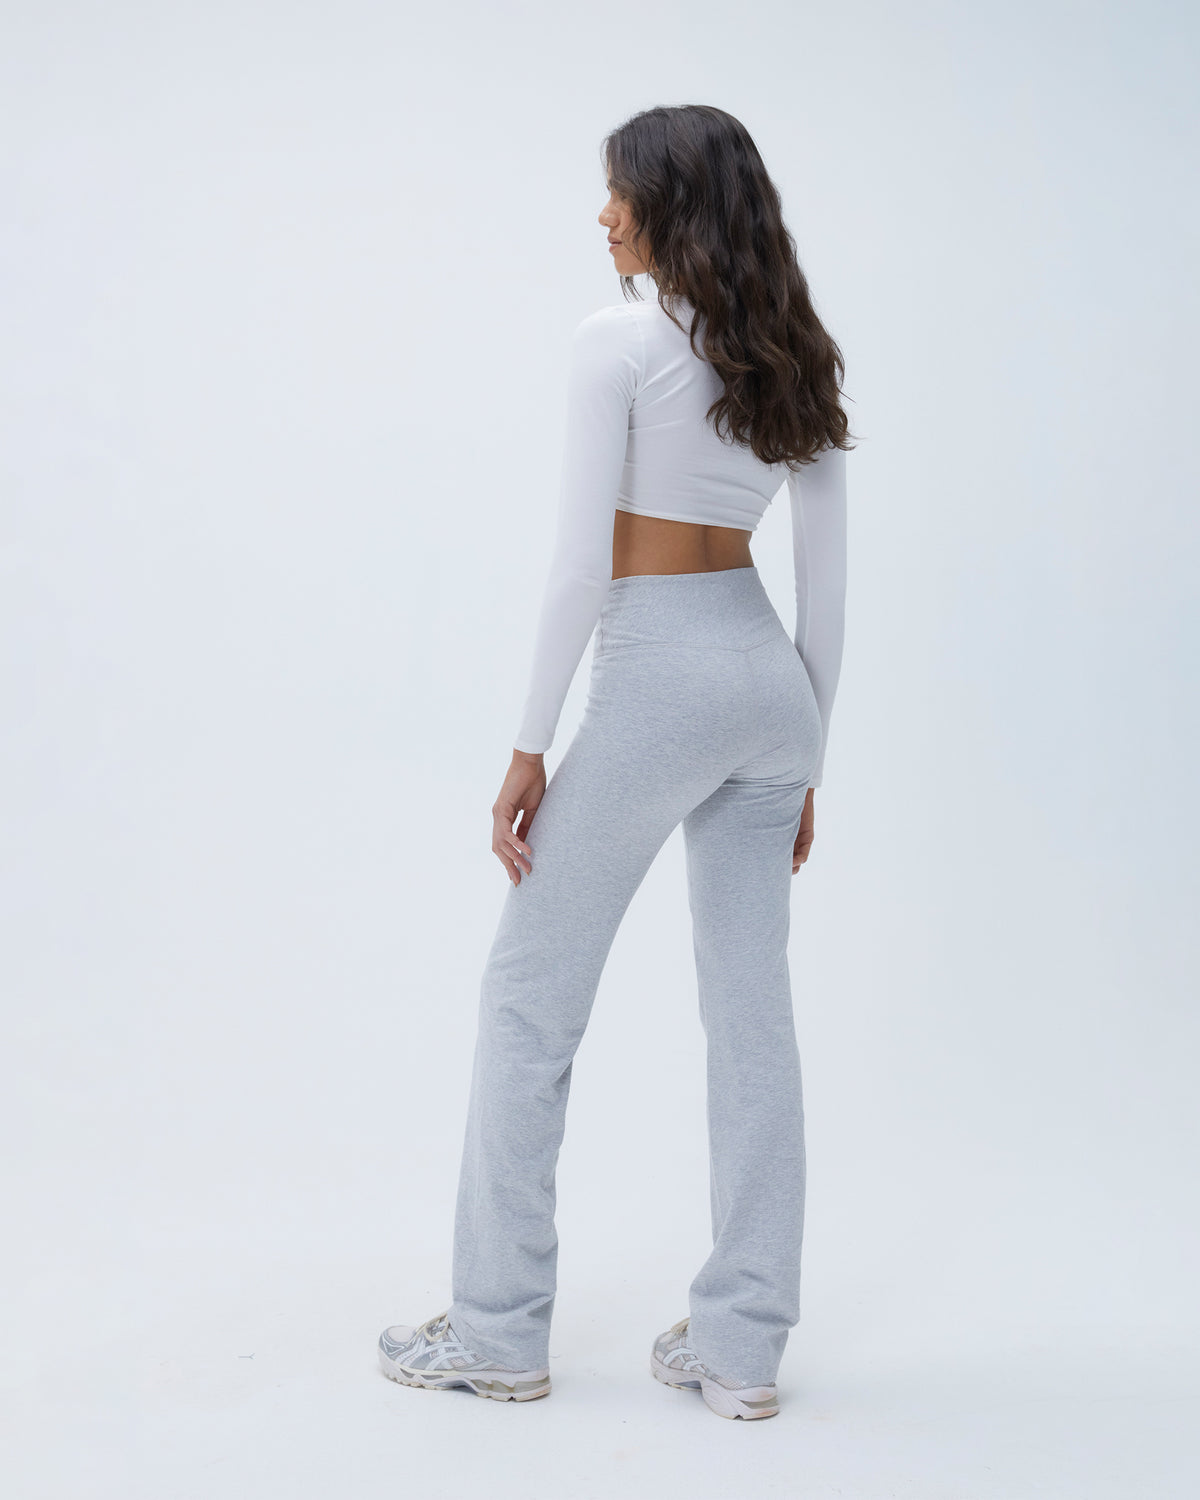 GAIAM Cropped Super Soft Gray Patterned Yoga Pants Leggings